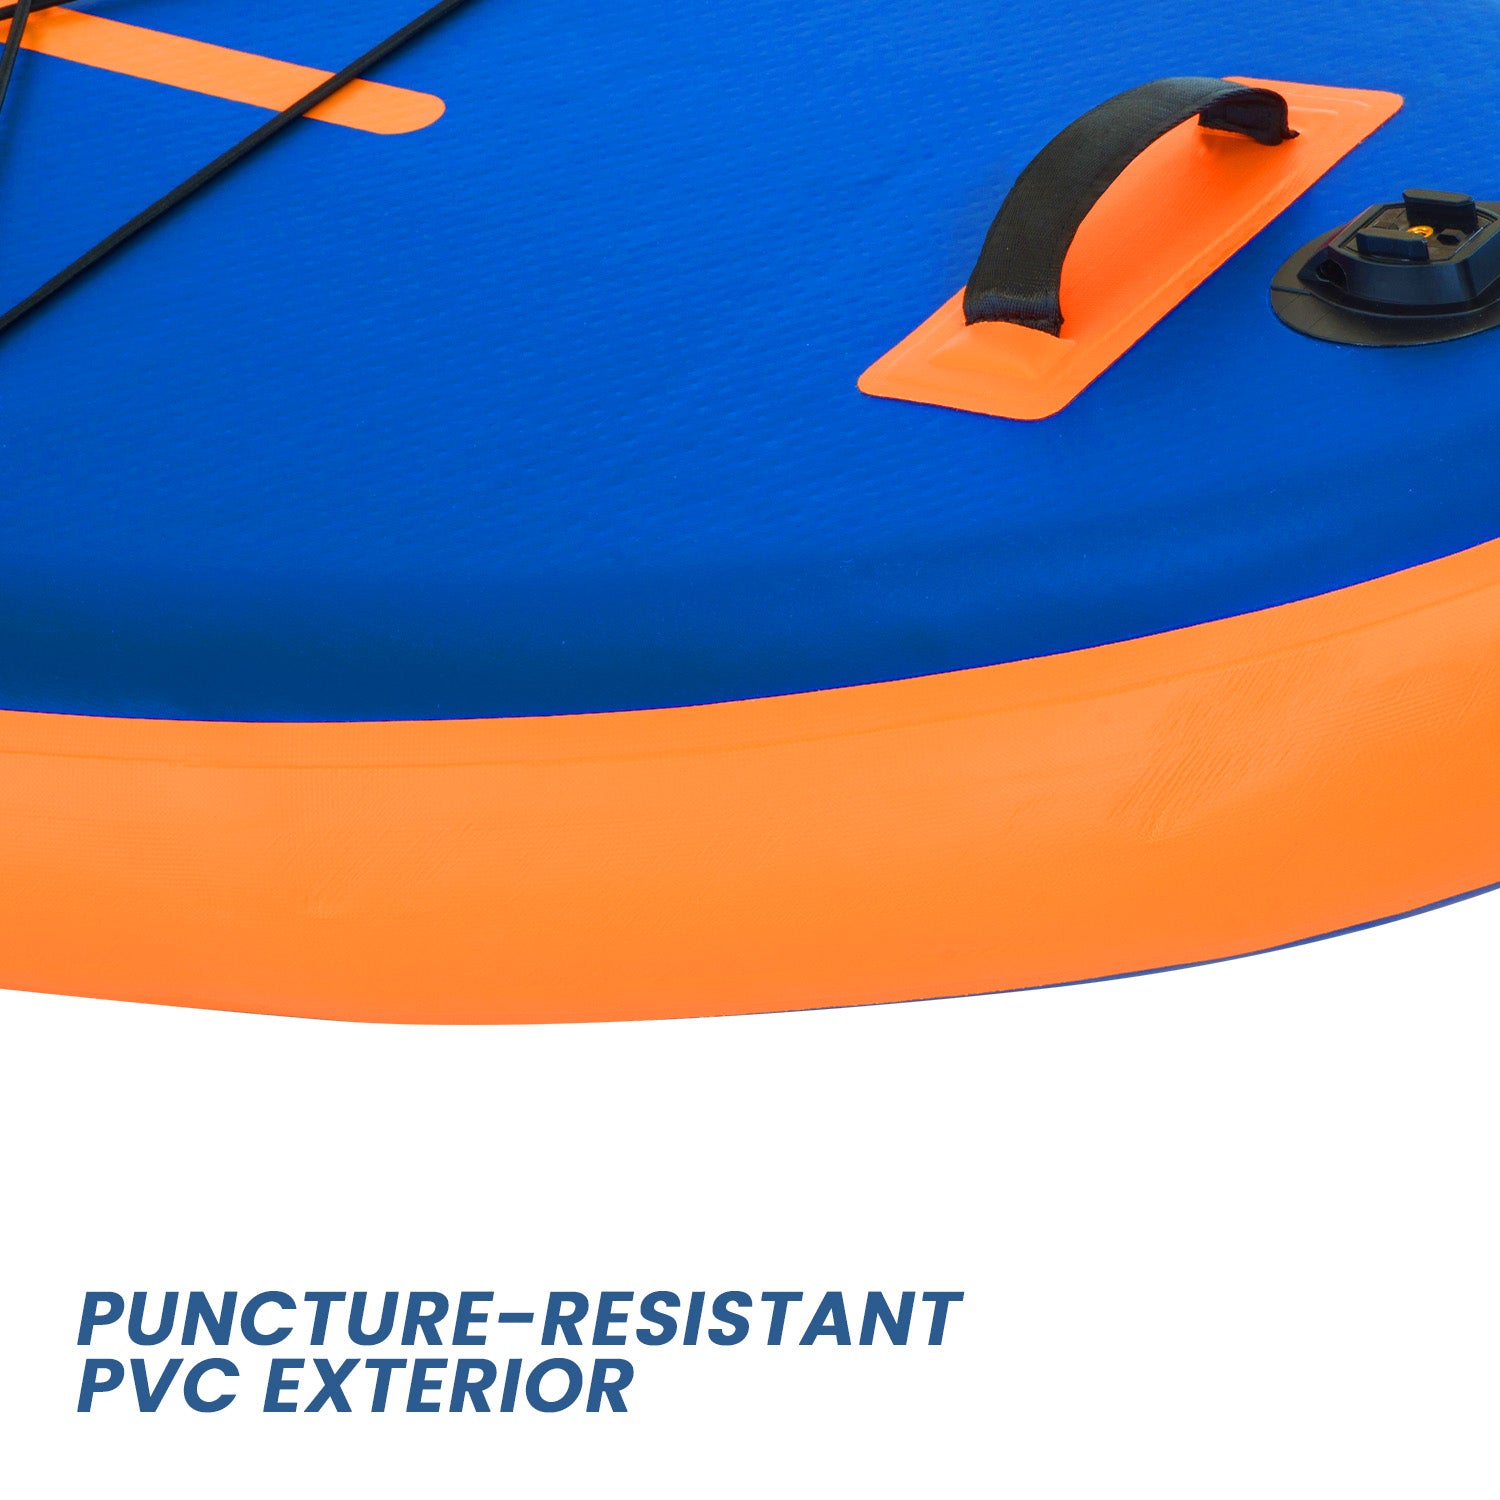 Kahuna Kai Premium Sports 10.6FT Inflatable Paddle Board - SILBERSHELL